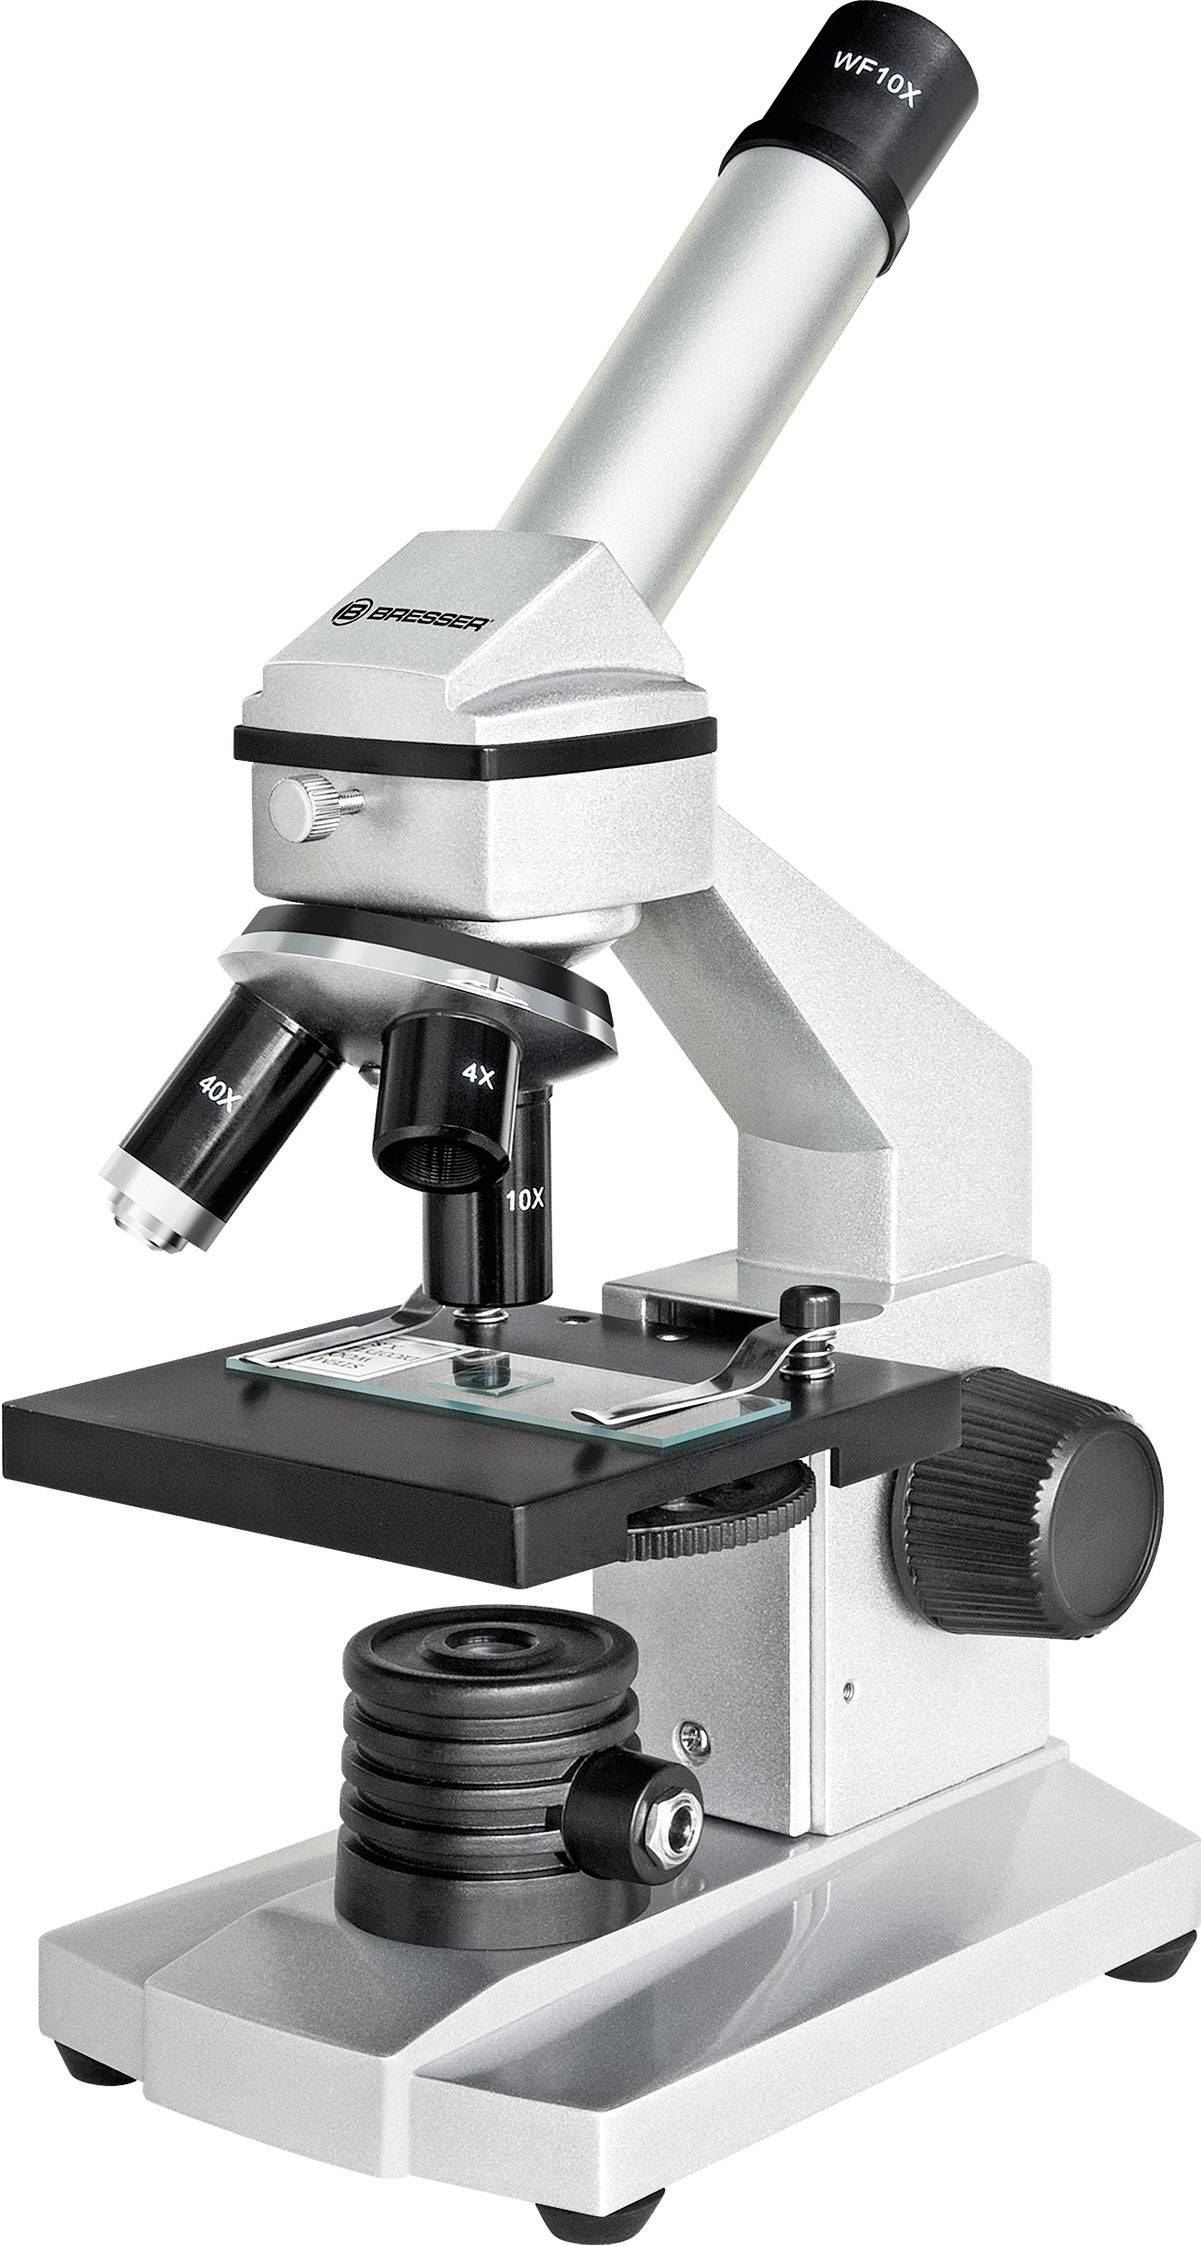 bresser usb microscope software download